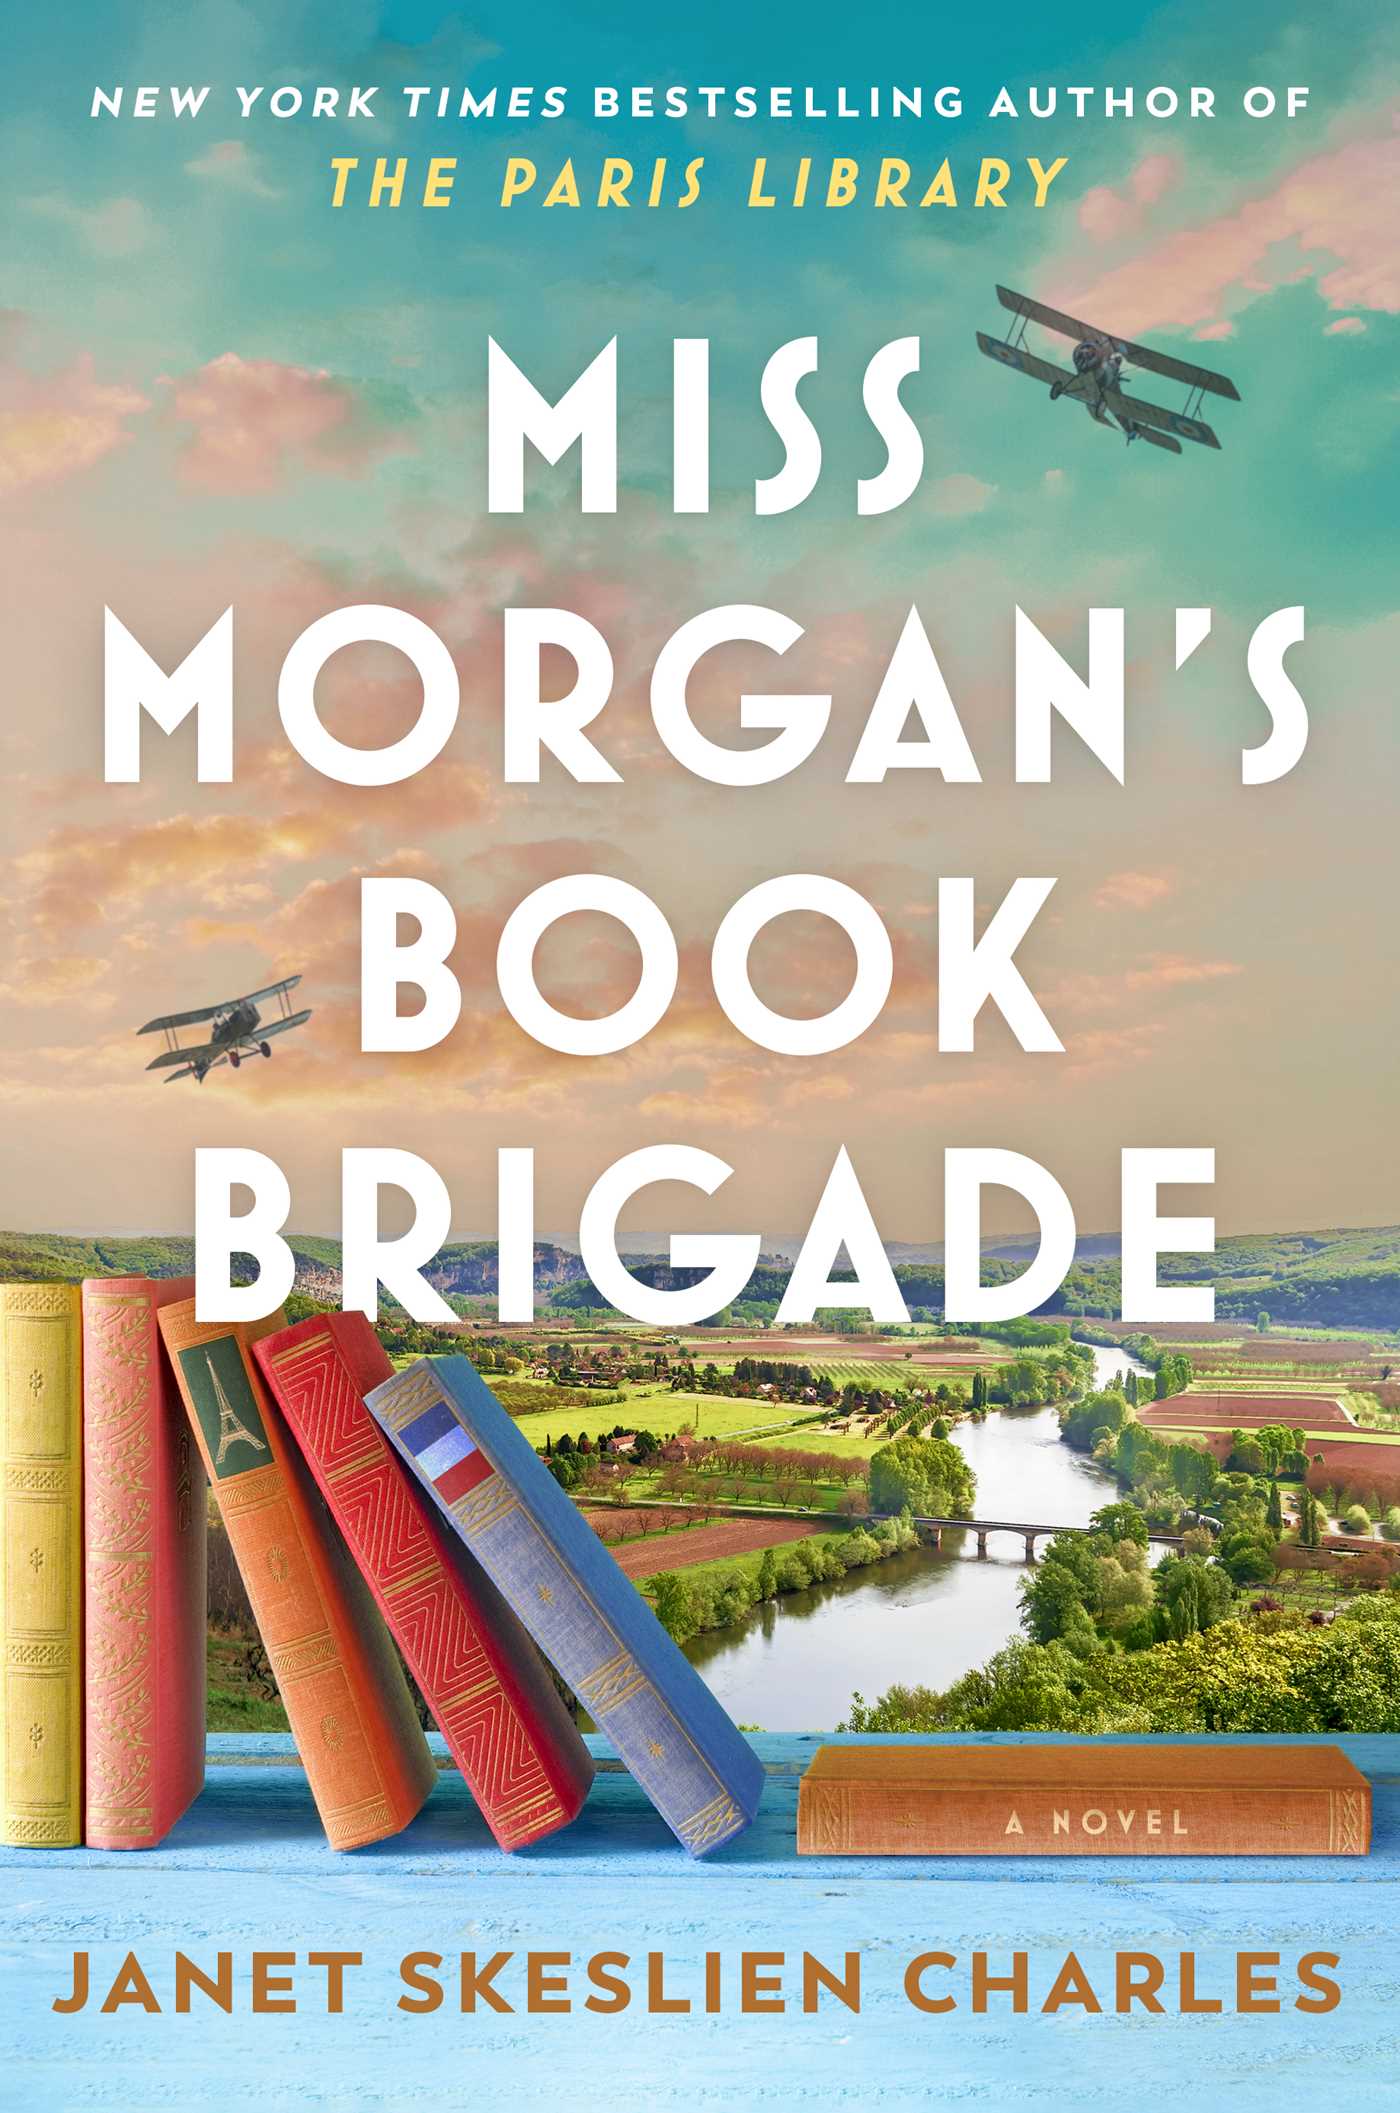 Image for "Miss Morgan's Book Brigade"